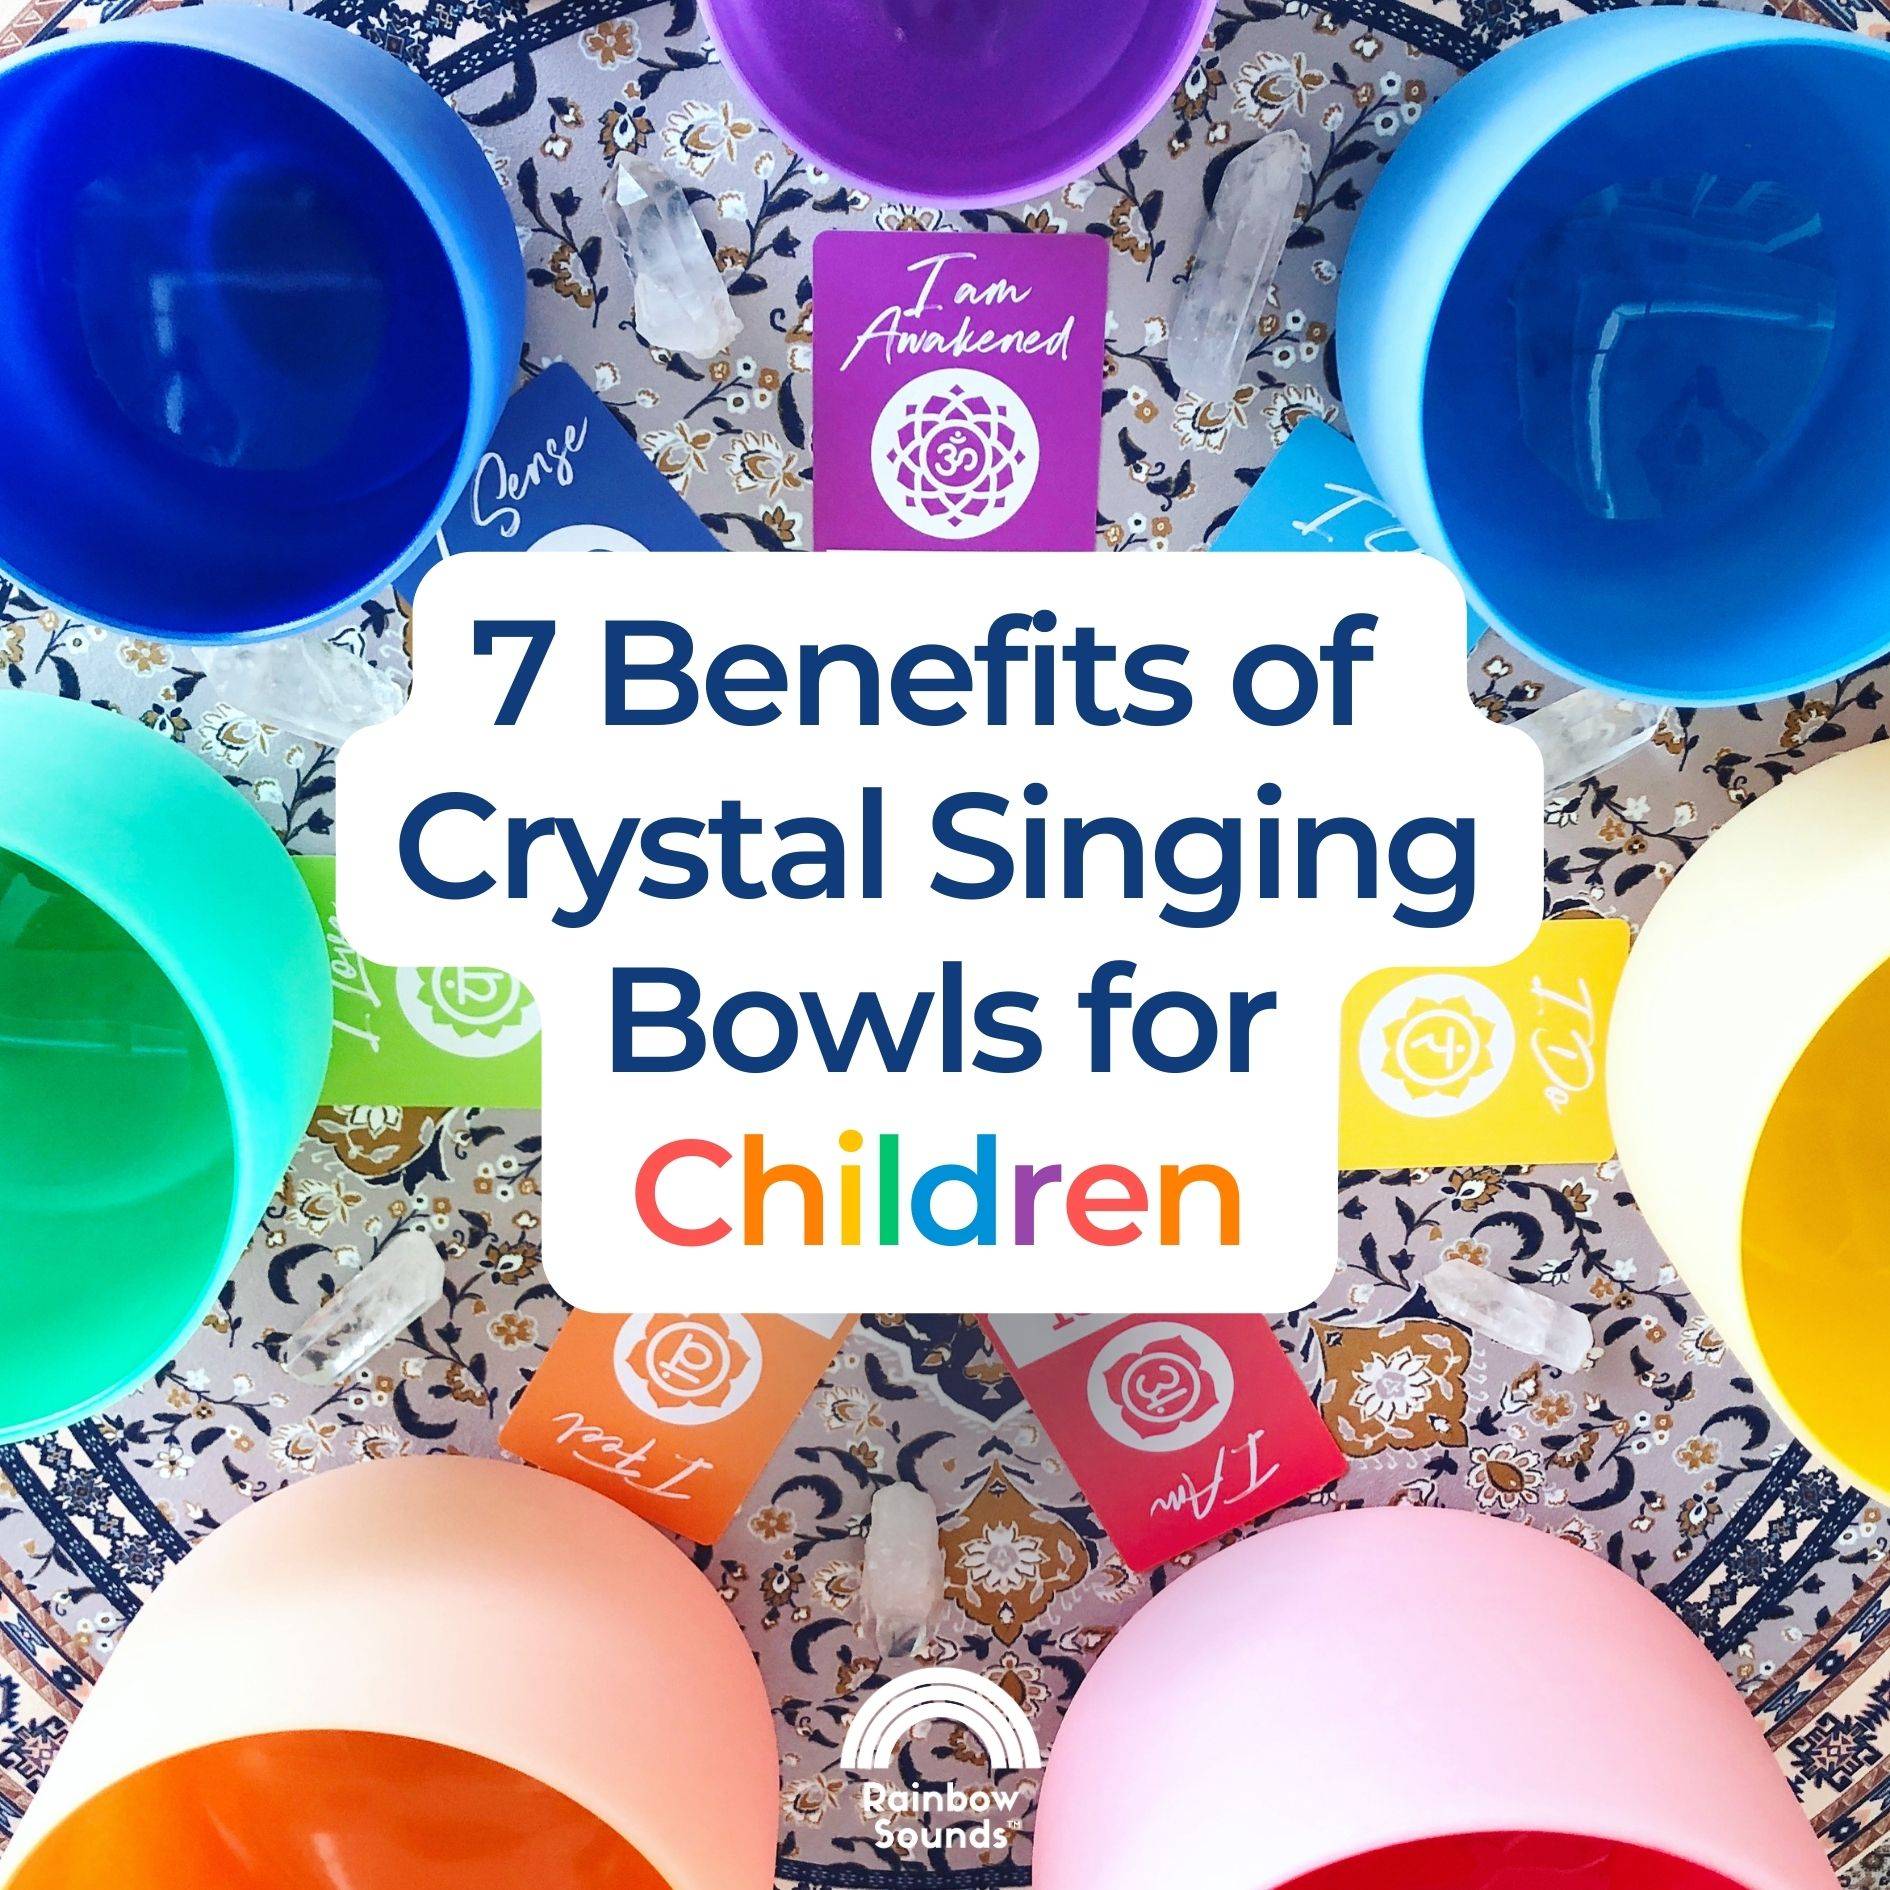 7 Benefits of Crystal Singing Bowls for Children